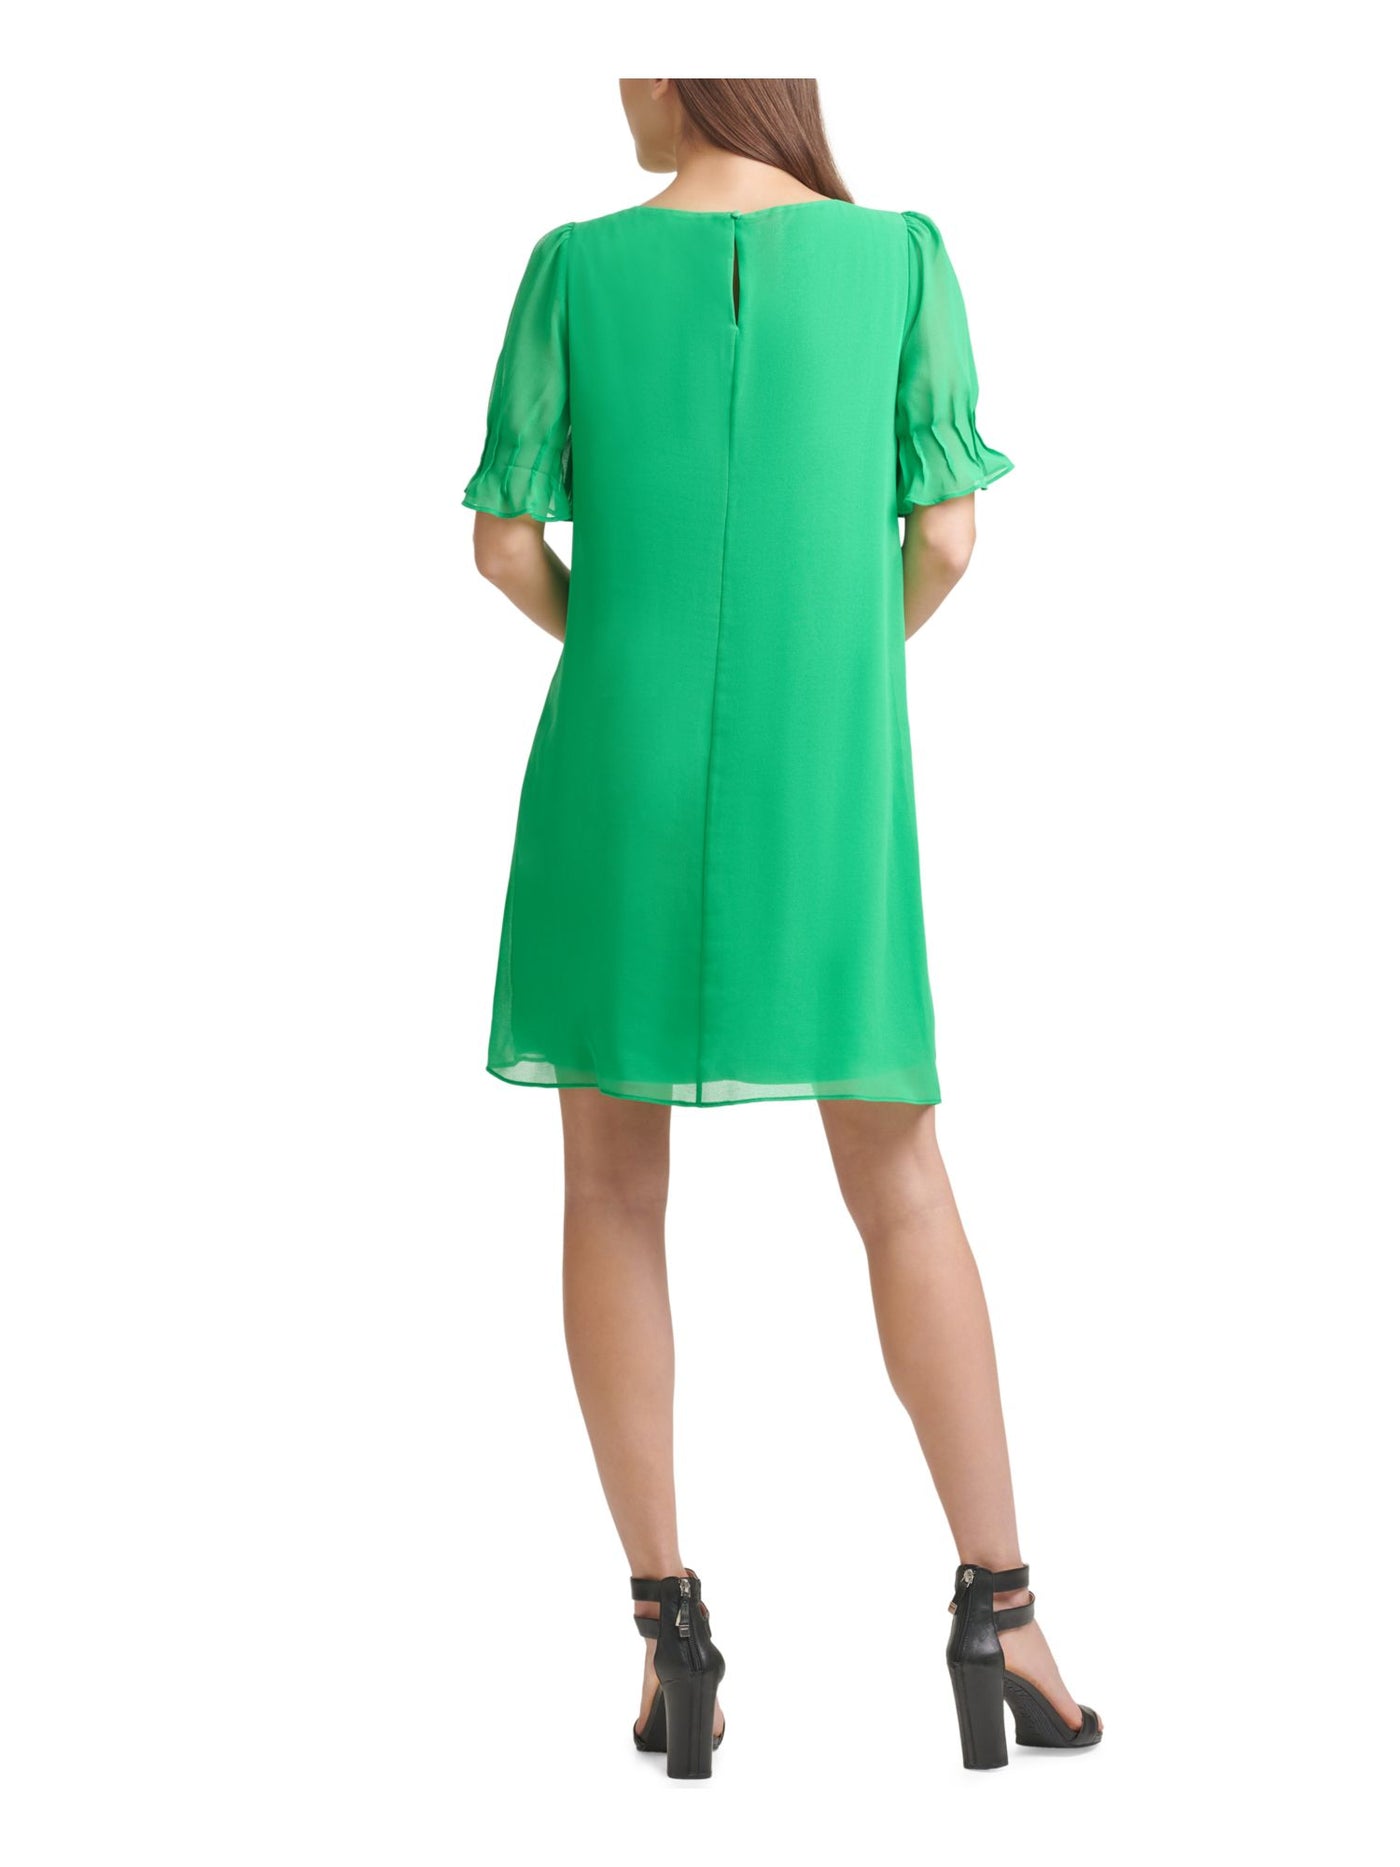 DKNY Womens Green Pleated Sheer Lined  Back Button Closure Short Sleeve Jewel Neck Short Evening Shift Dress 4